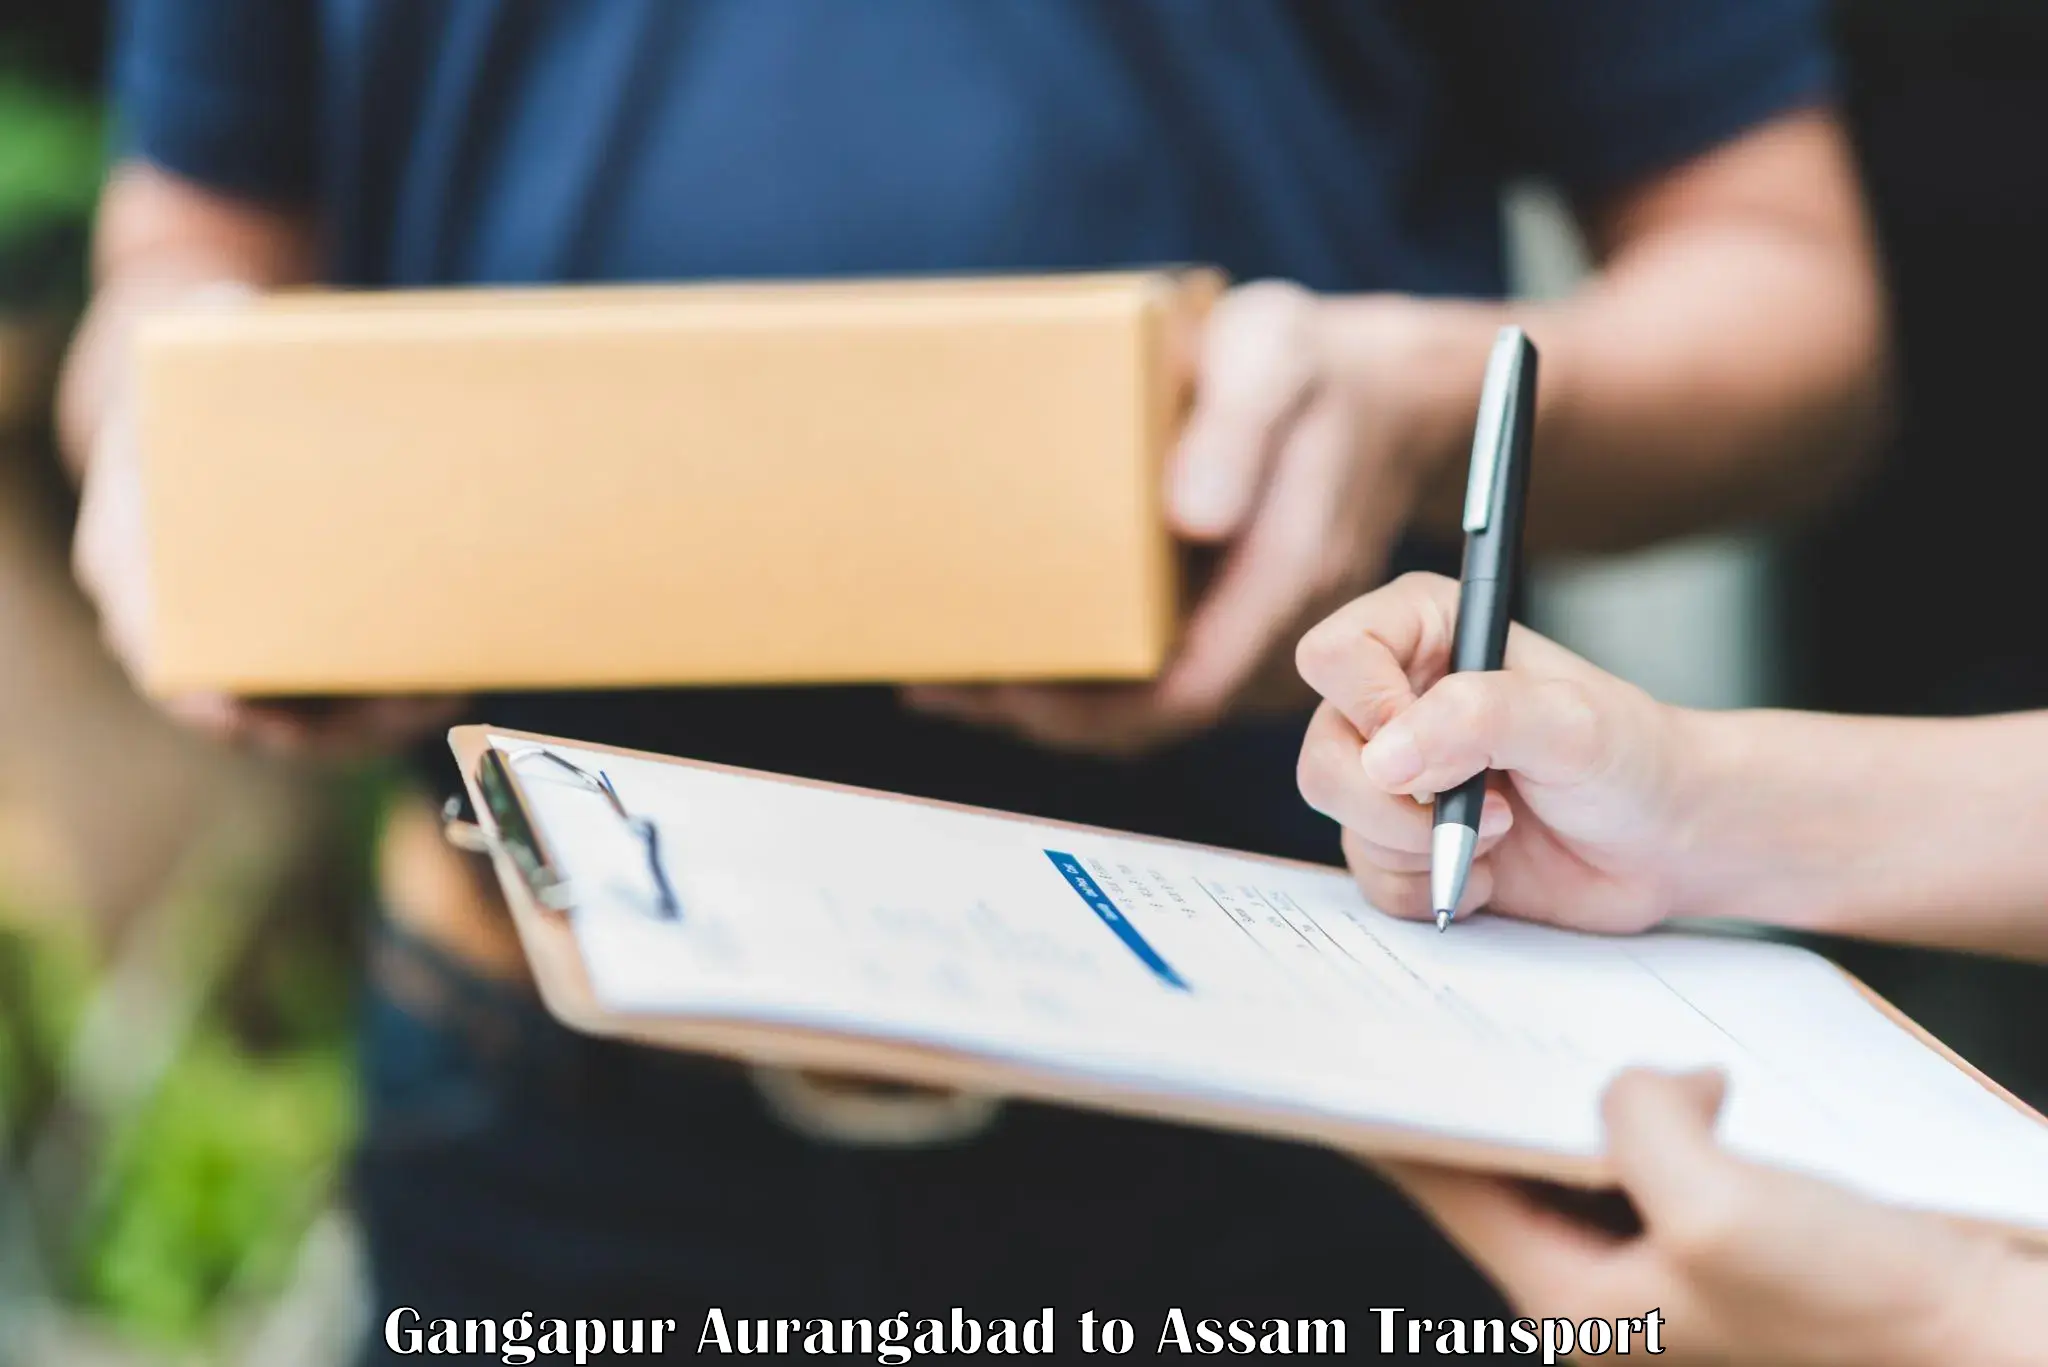 Part load transport service in India Gangapur Aurangabad to Thelamara